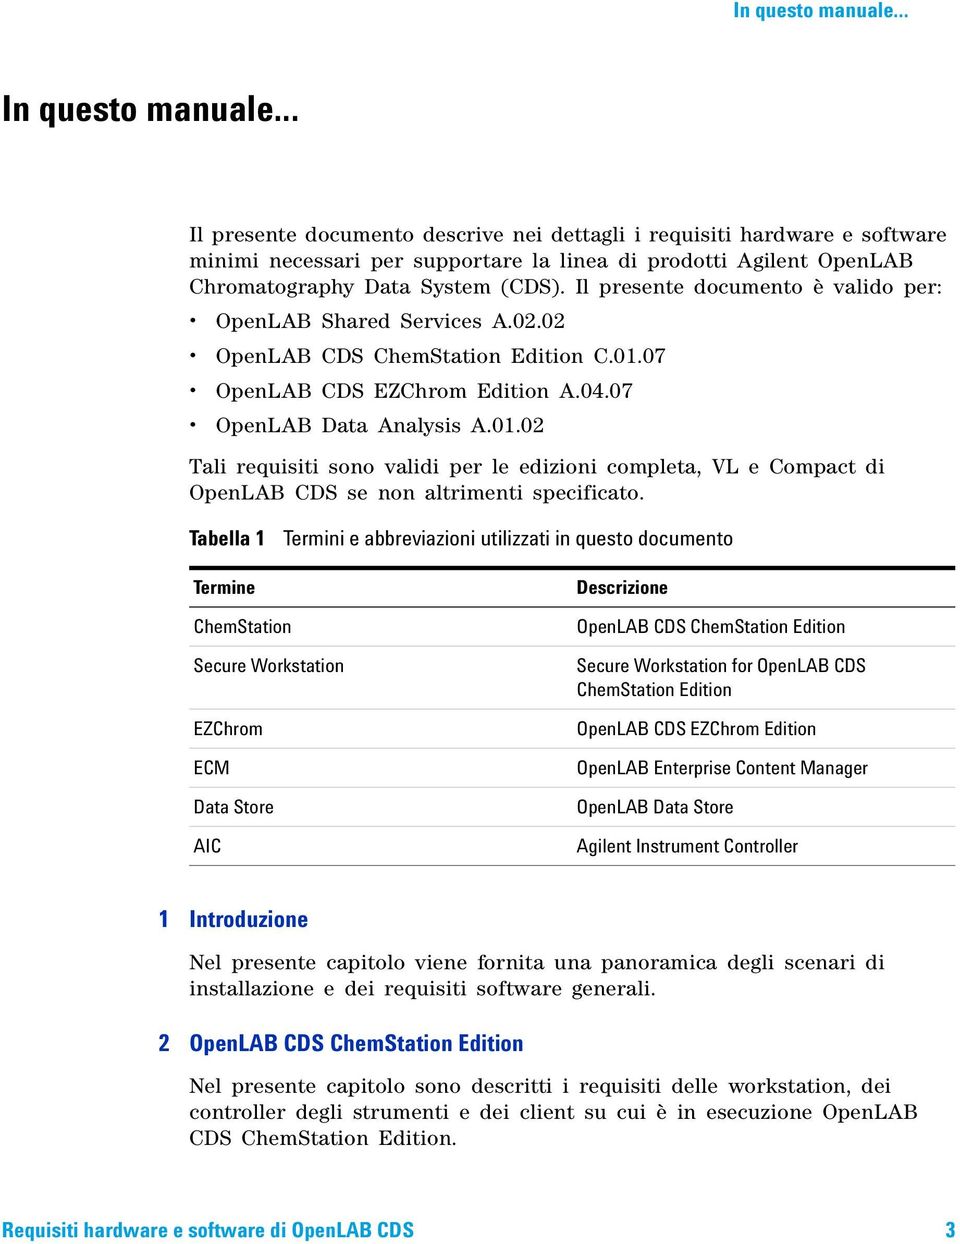 Il presente documento è valido per: OpenLAB Shared Services A.02.02 OpenLAB CDS ChemStation Edition C.01.